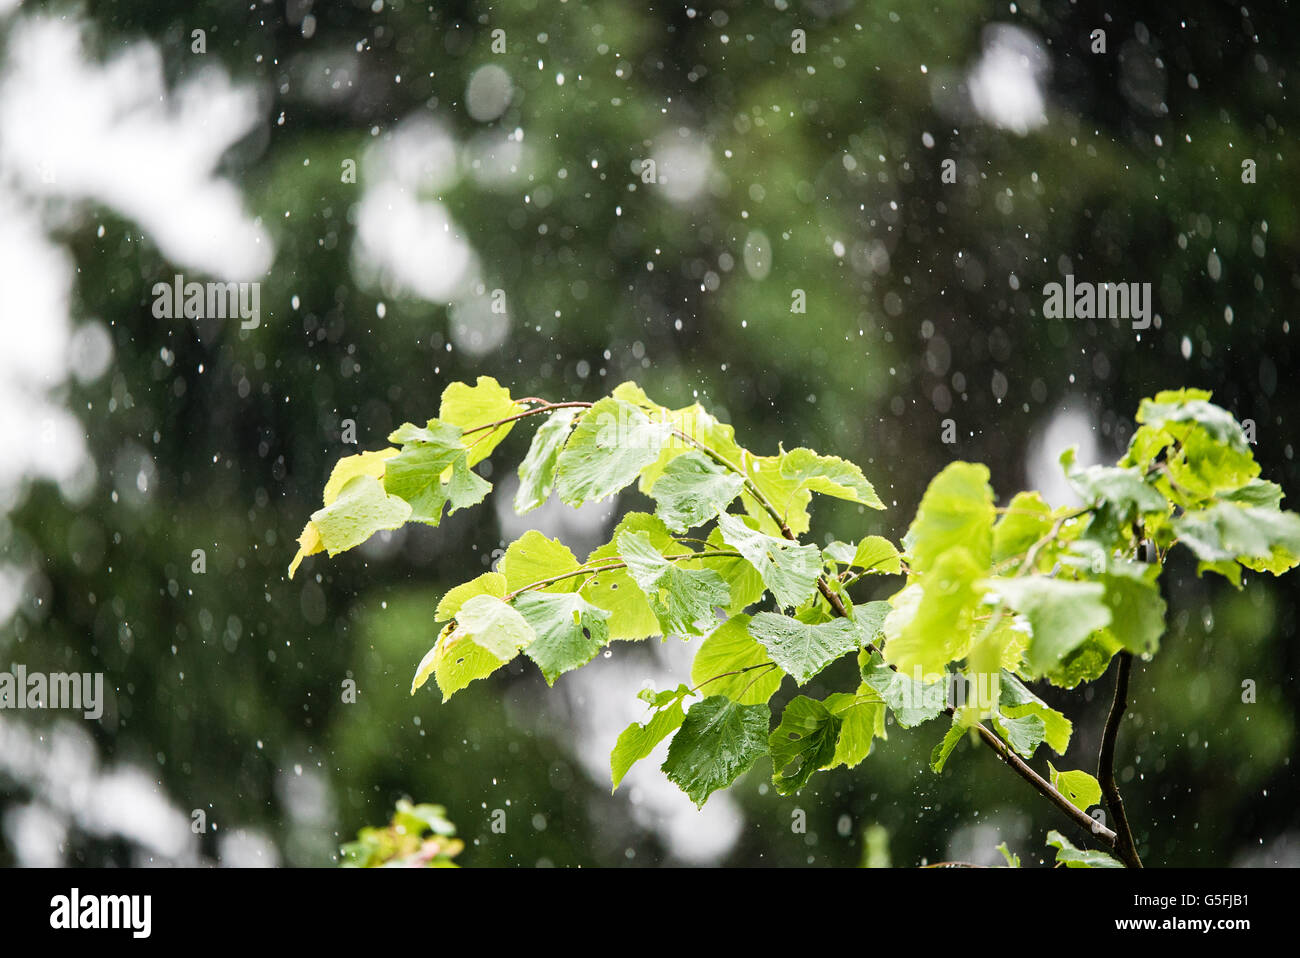 Summer rainy outside downpour Stock Photo